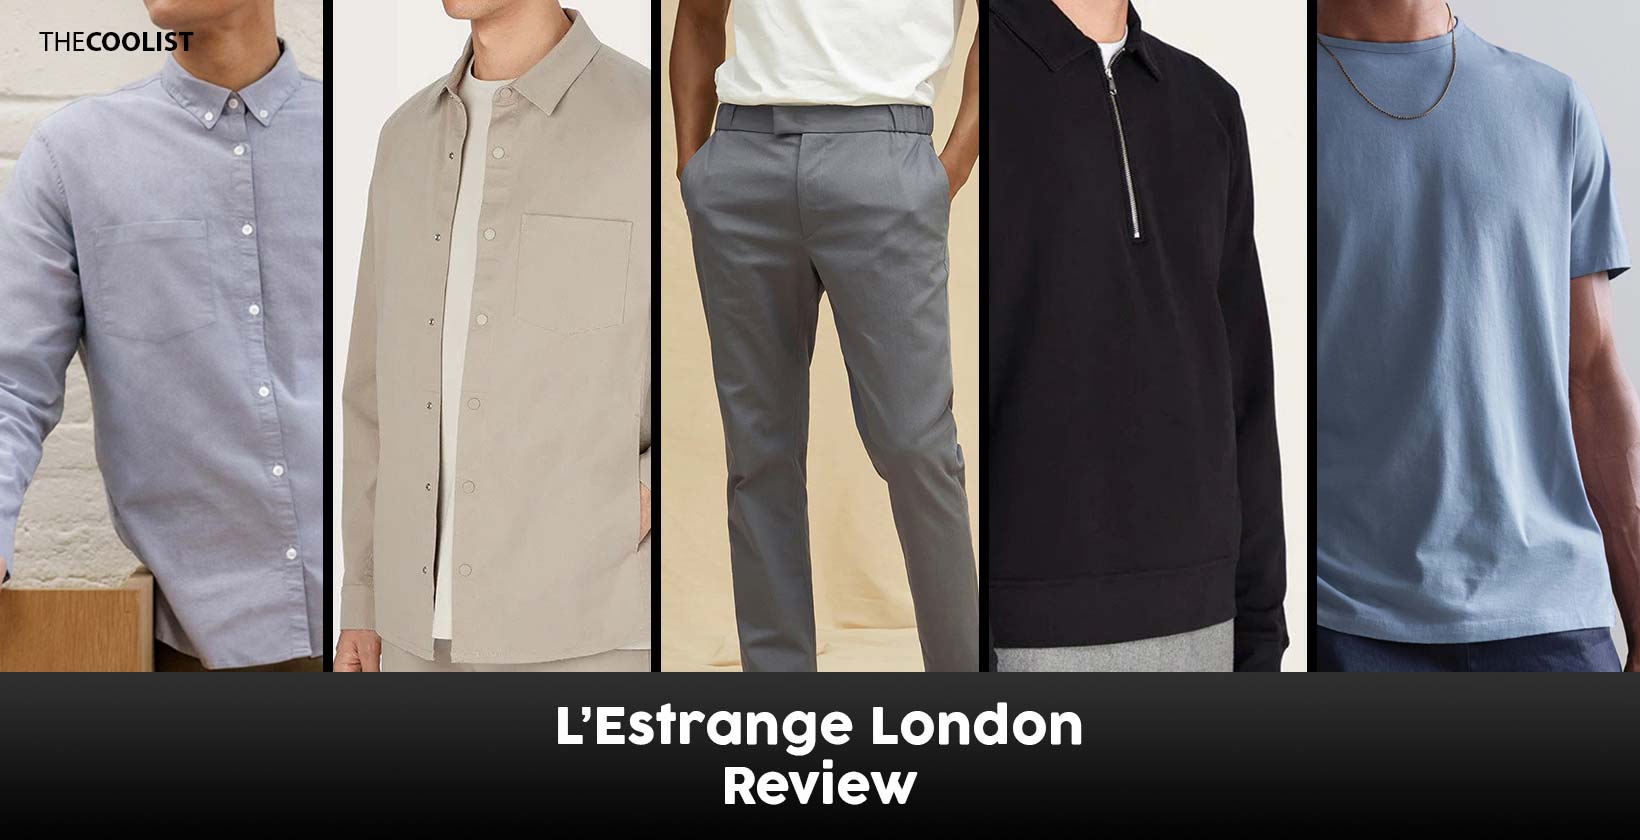 Review of L’Estrange London